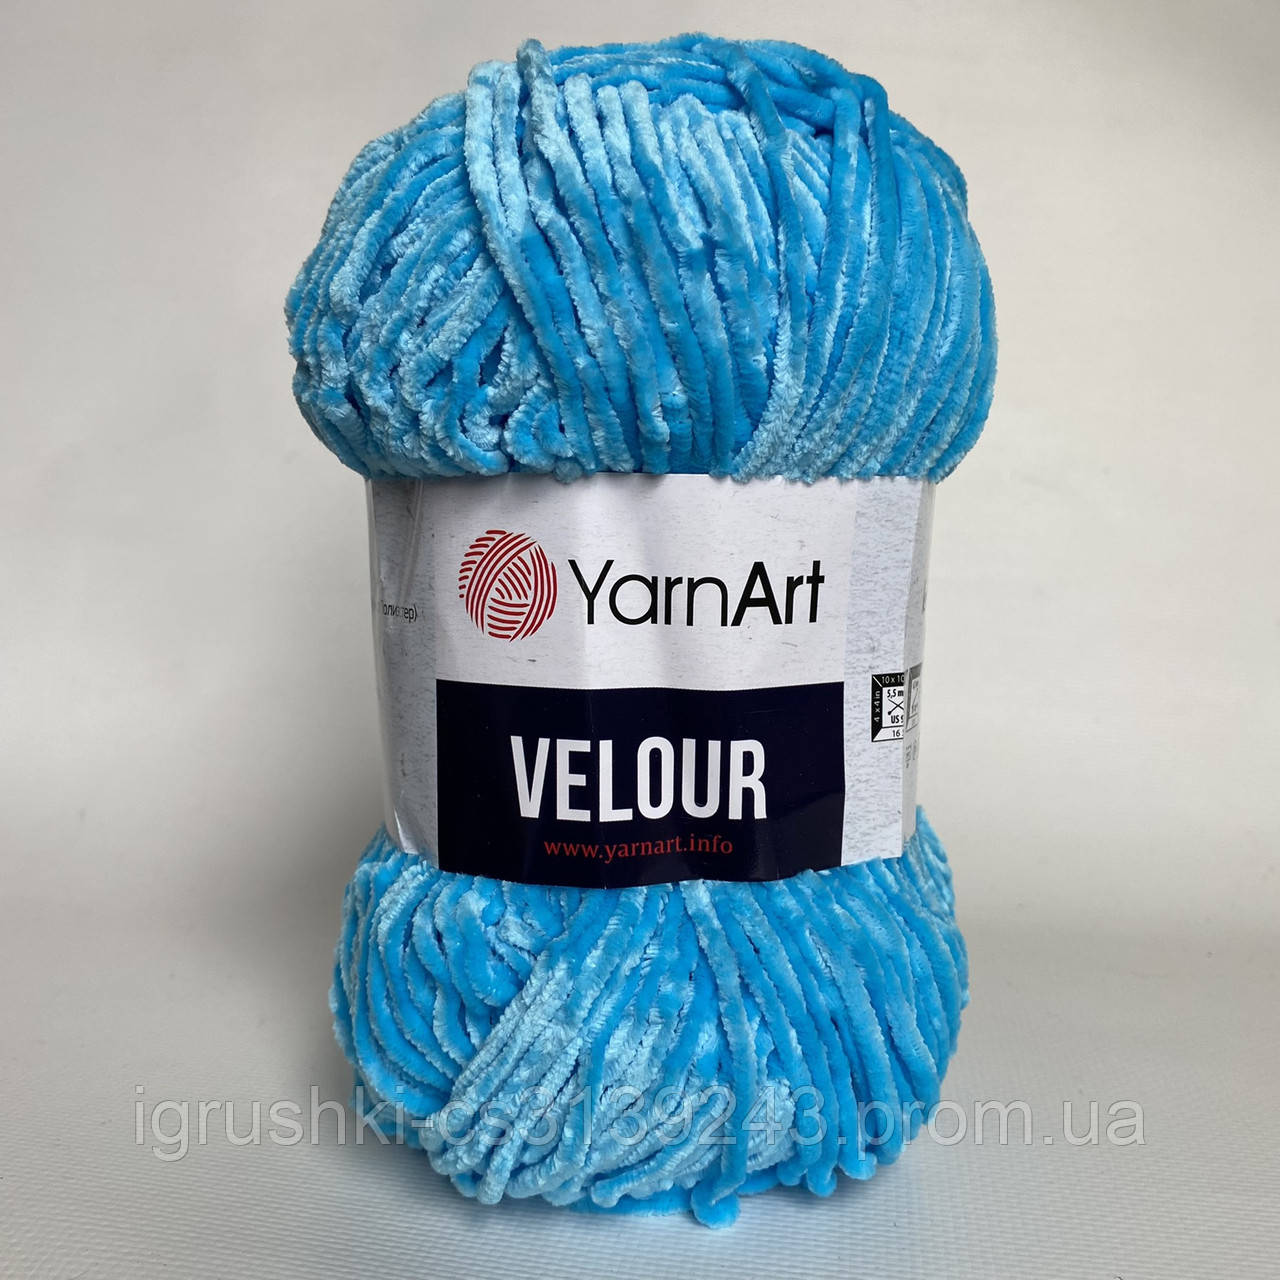 Велюровая пряжа YarnArt Velour 850 ( ЯрнАрт Велюр) Голубой яркий